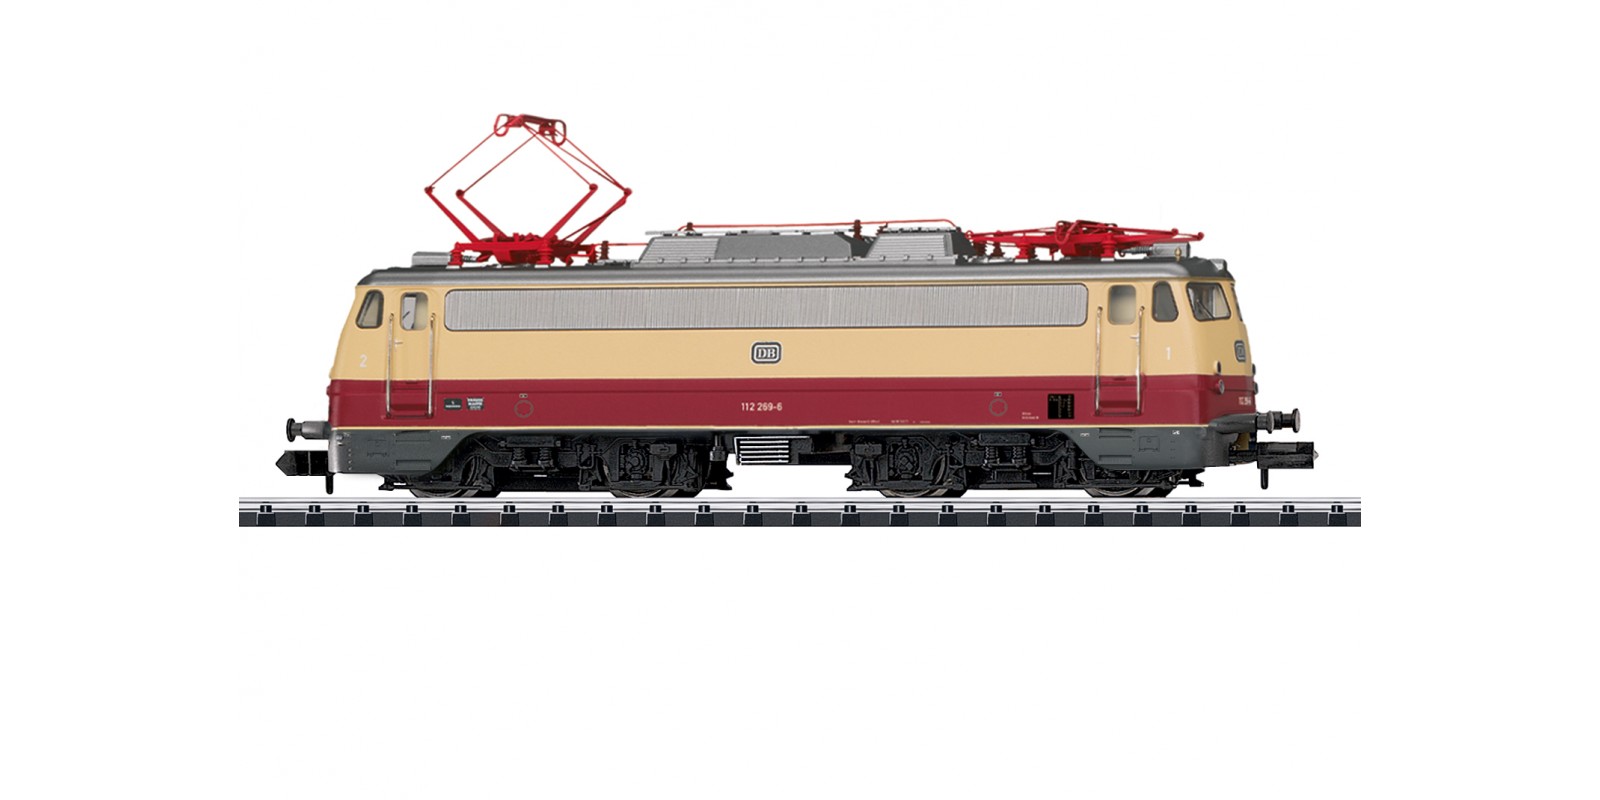 T16100 Class 112 Electric Locomotive